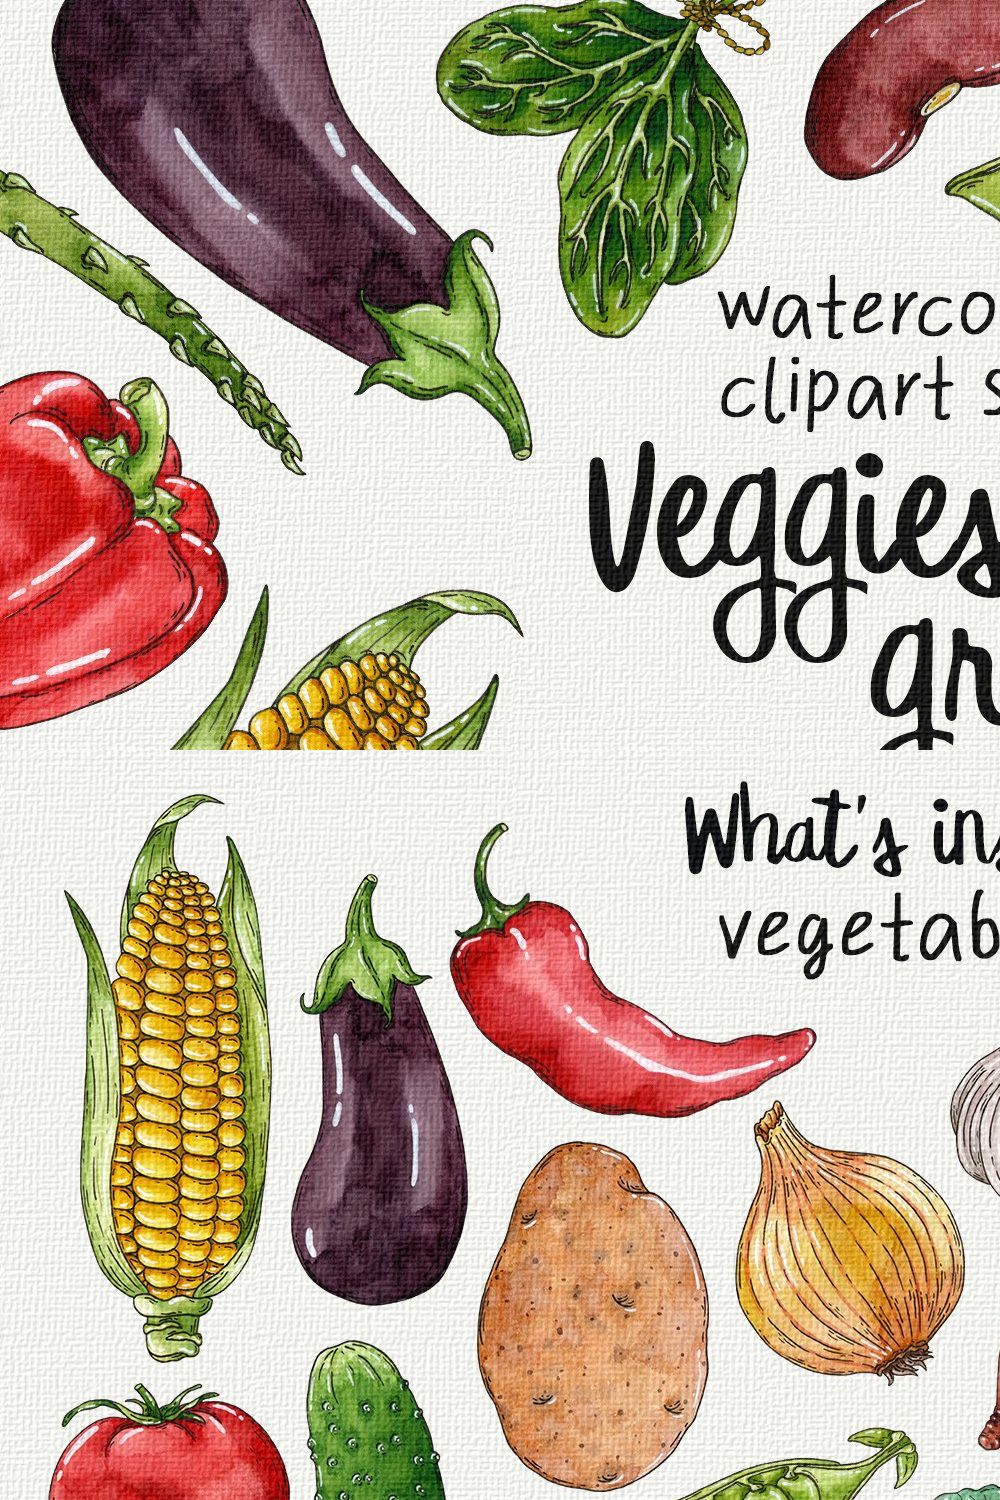 Veggies & greens watercolor clipart pinterest preview image.